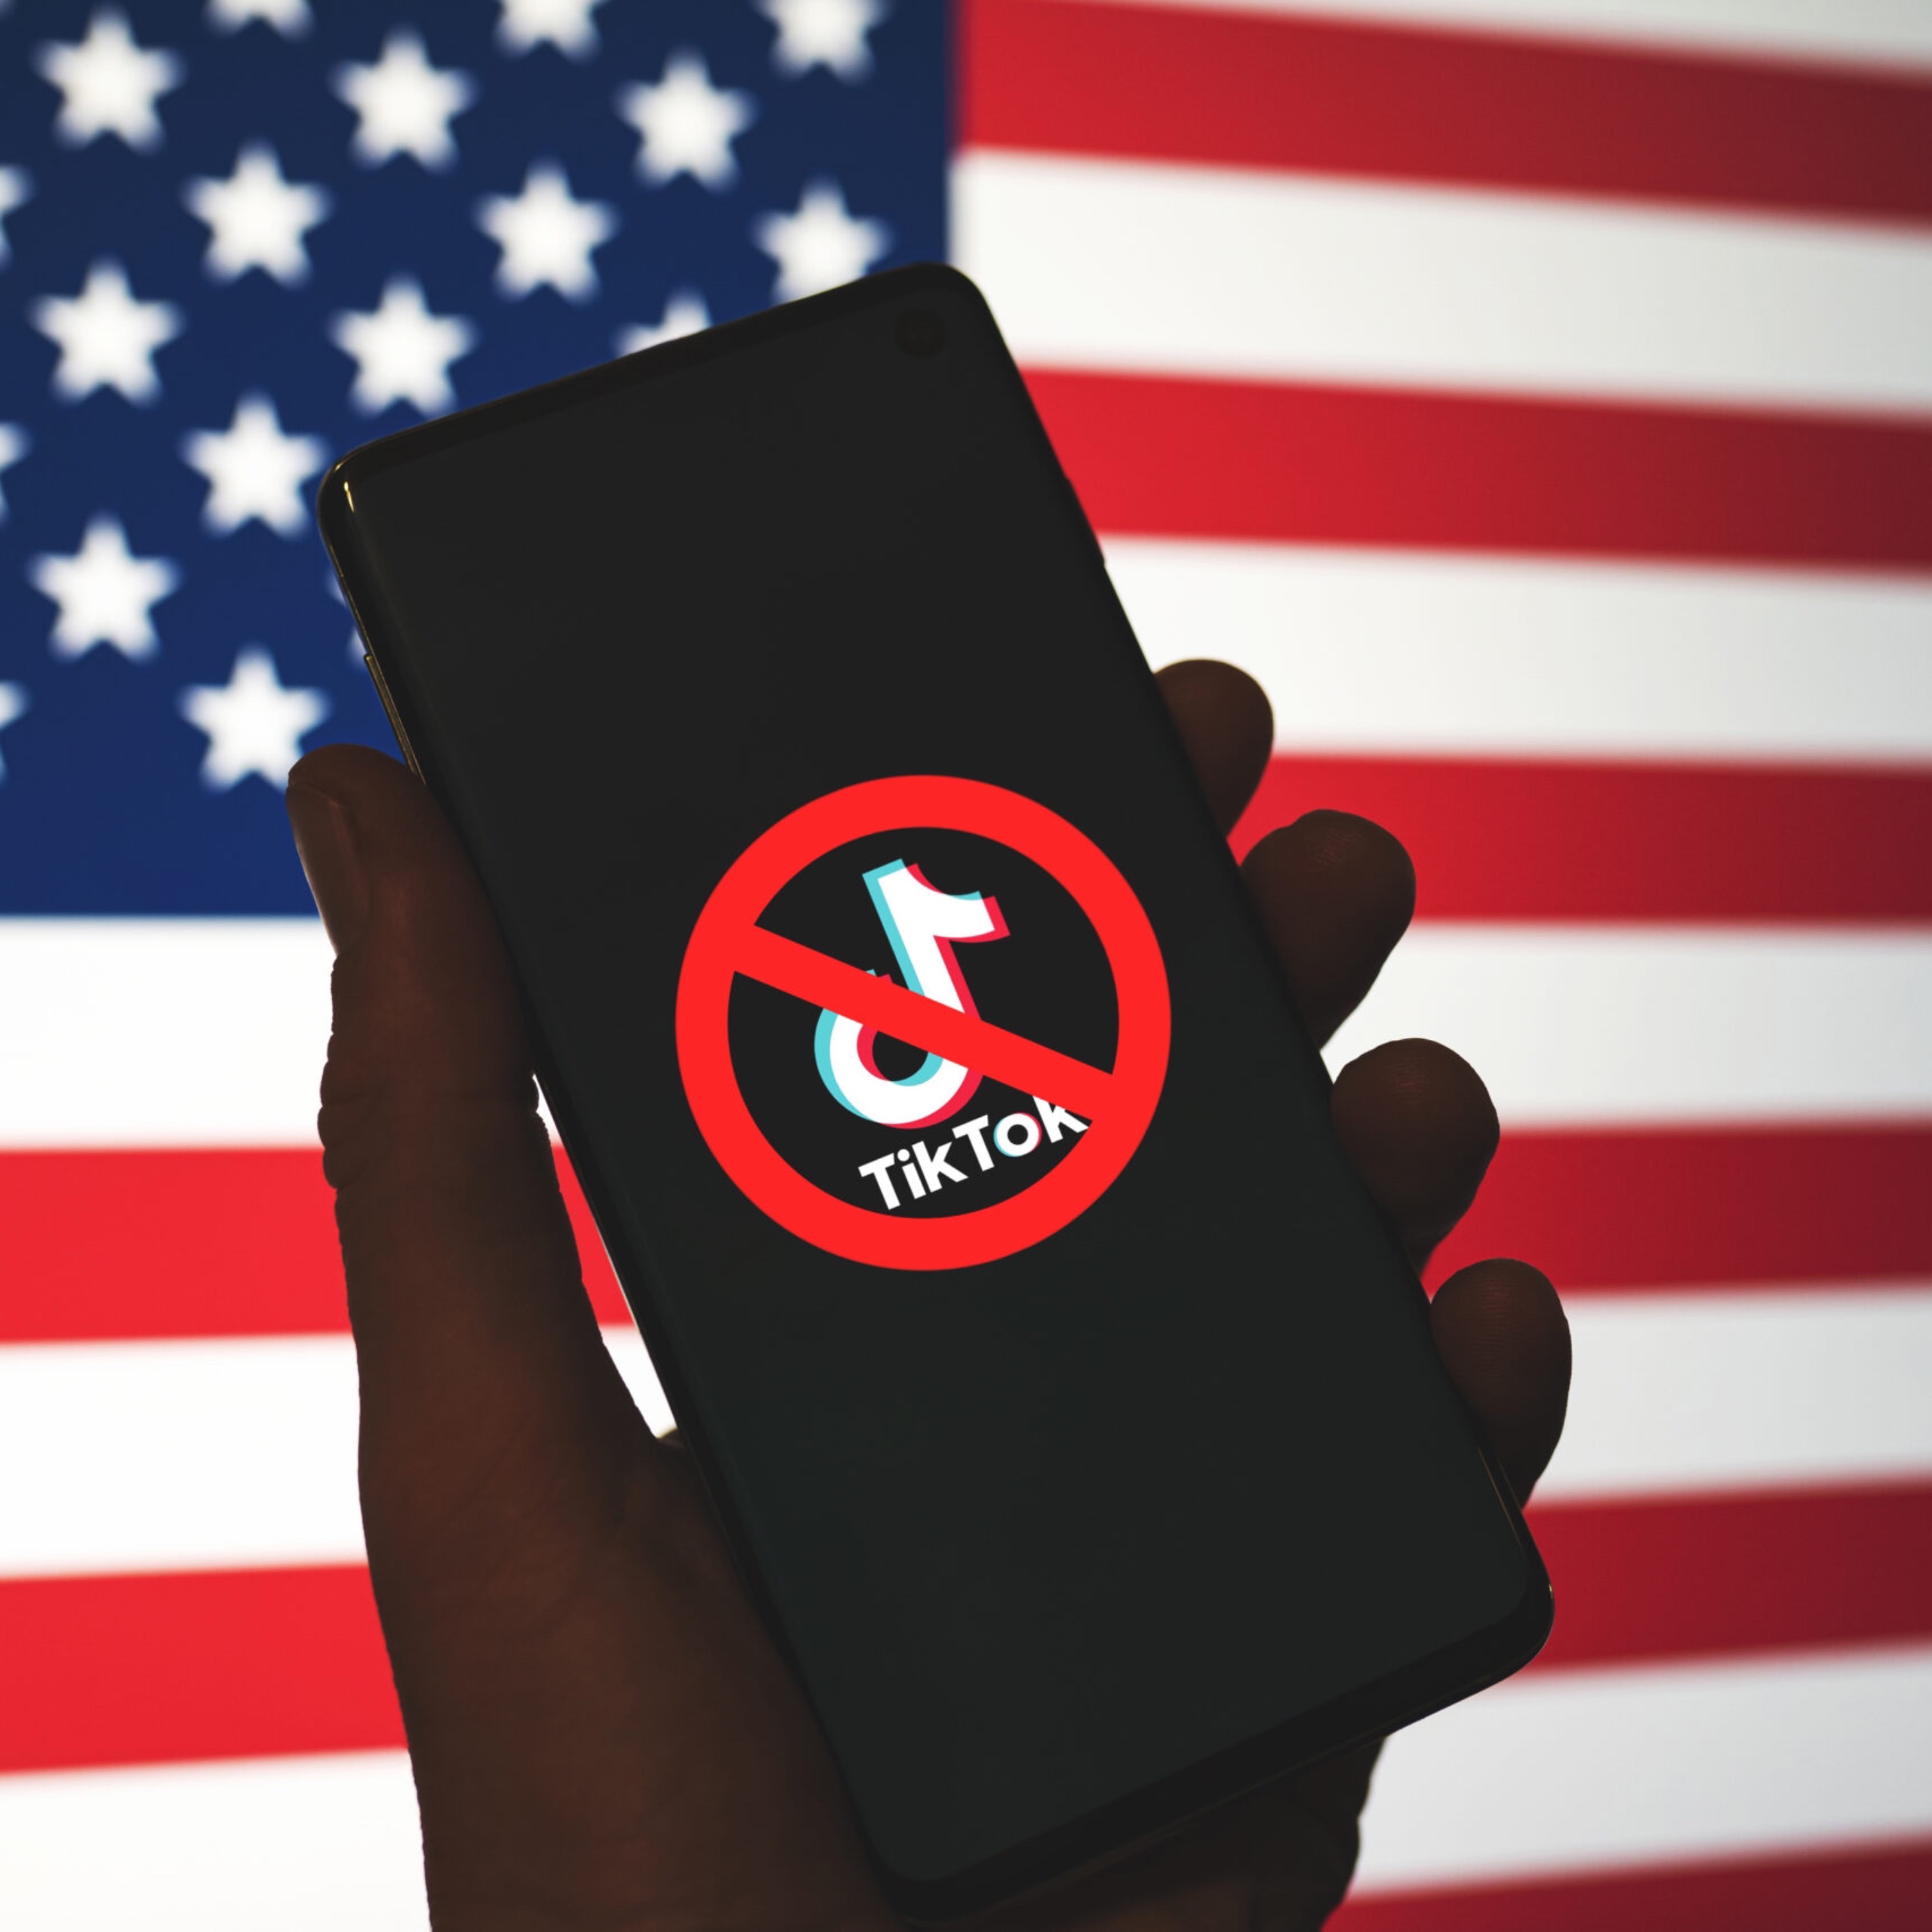 TikTok Sues to Block U.S. Ban